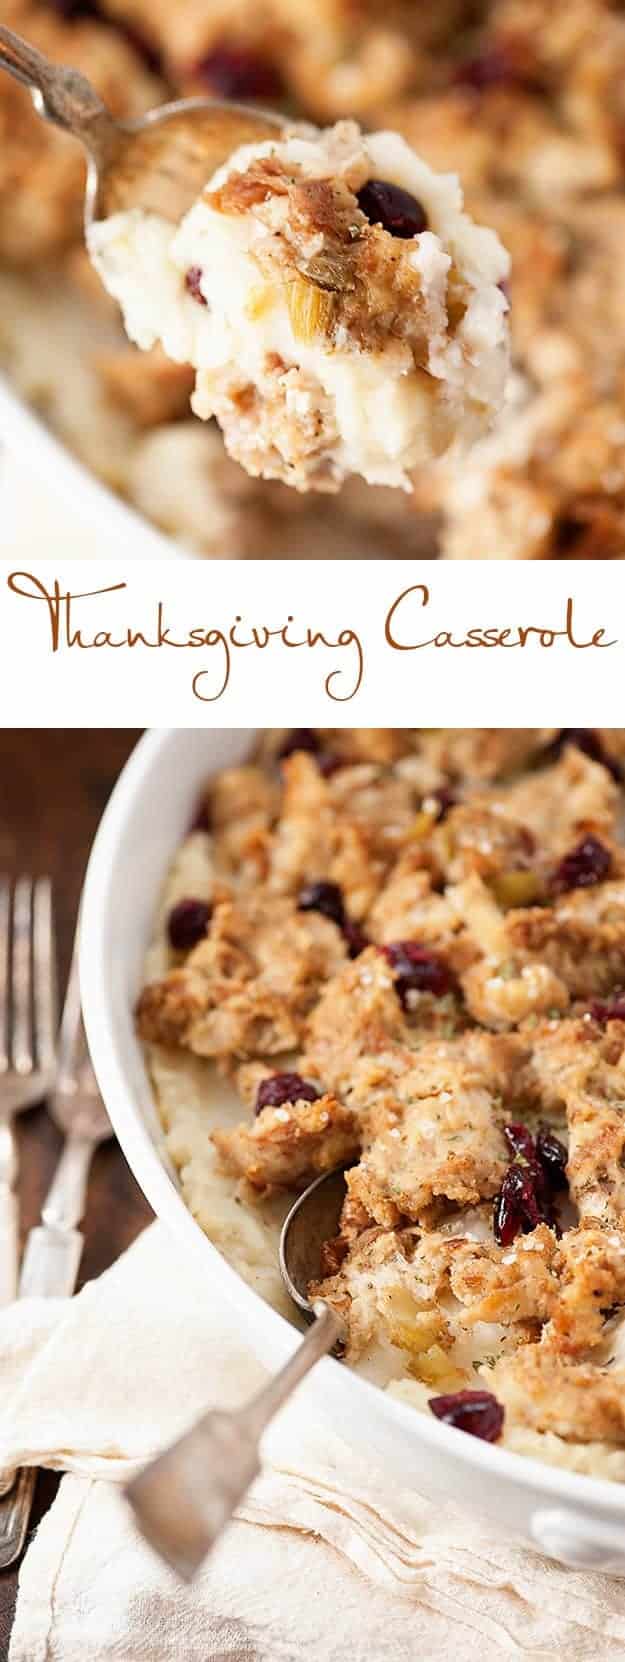 Thanksgiving Casserole